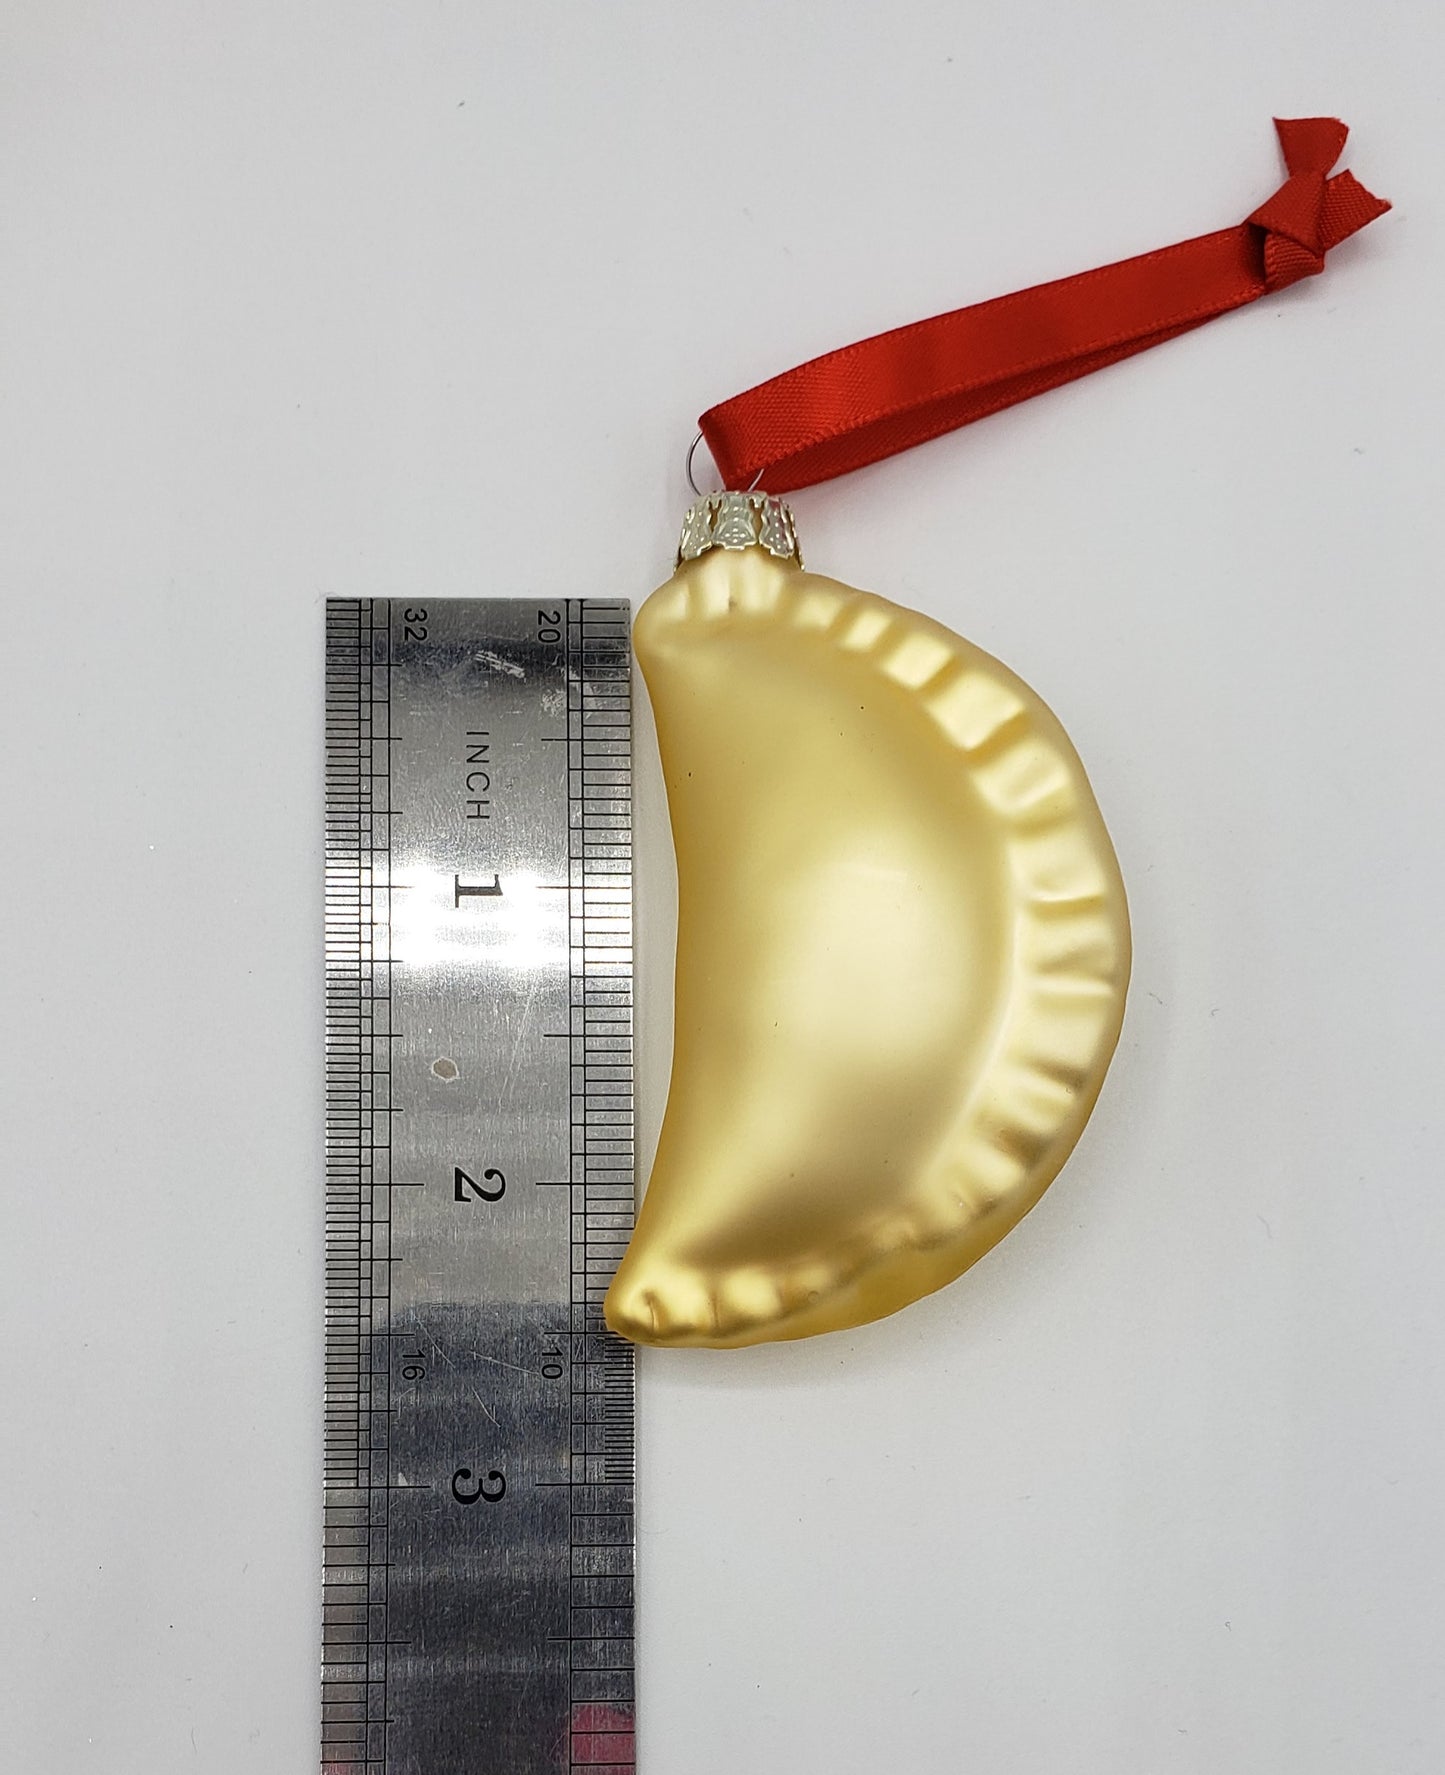 Pierogi ornament is 2.5 inches long